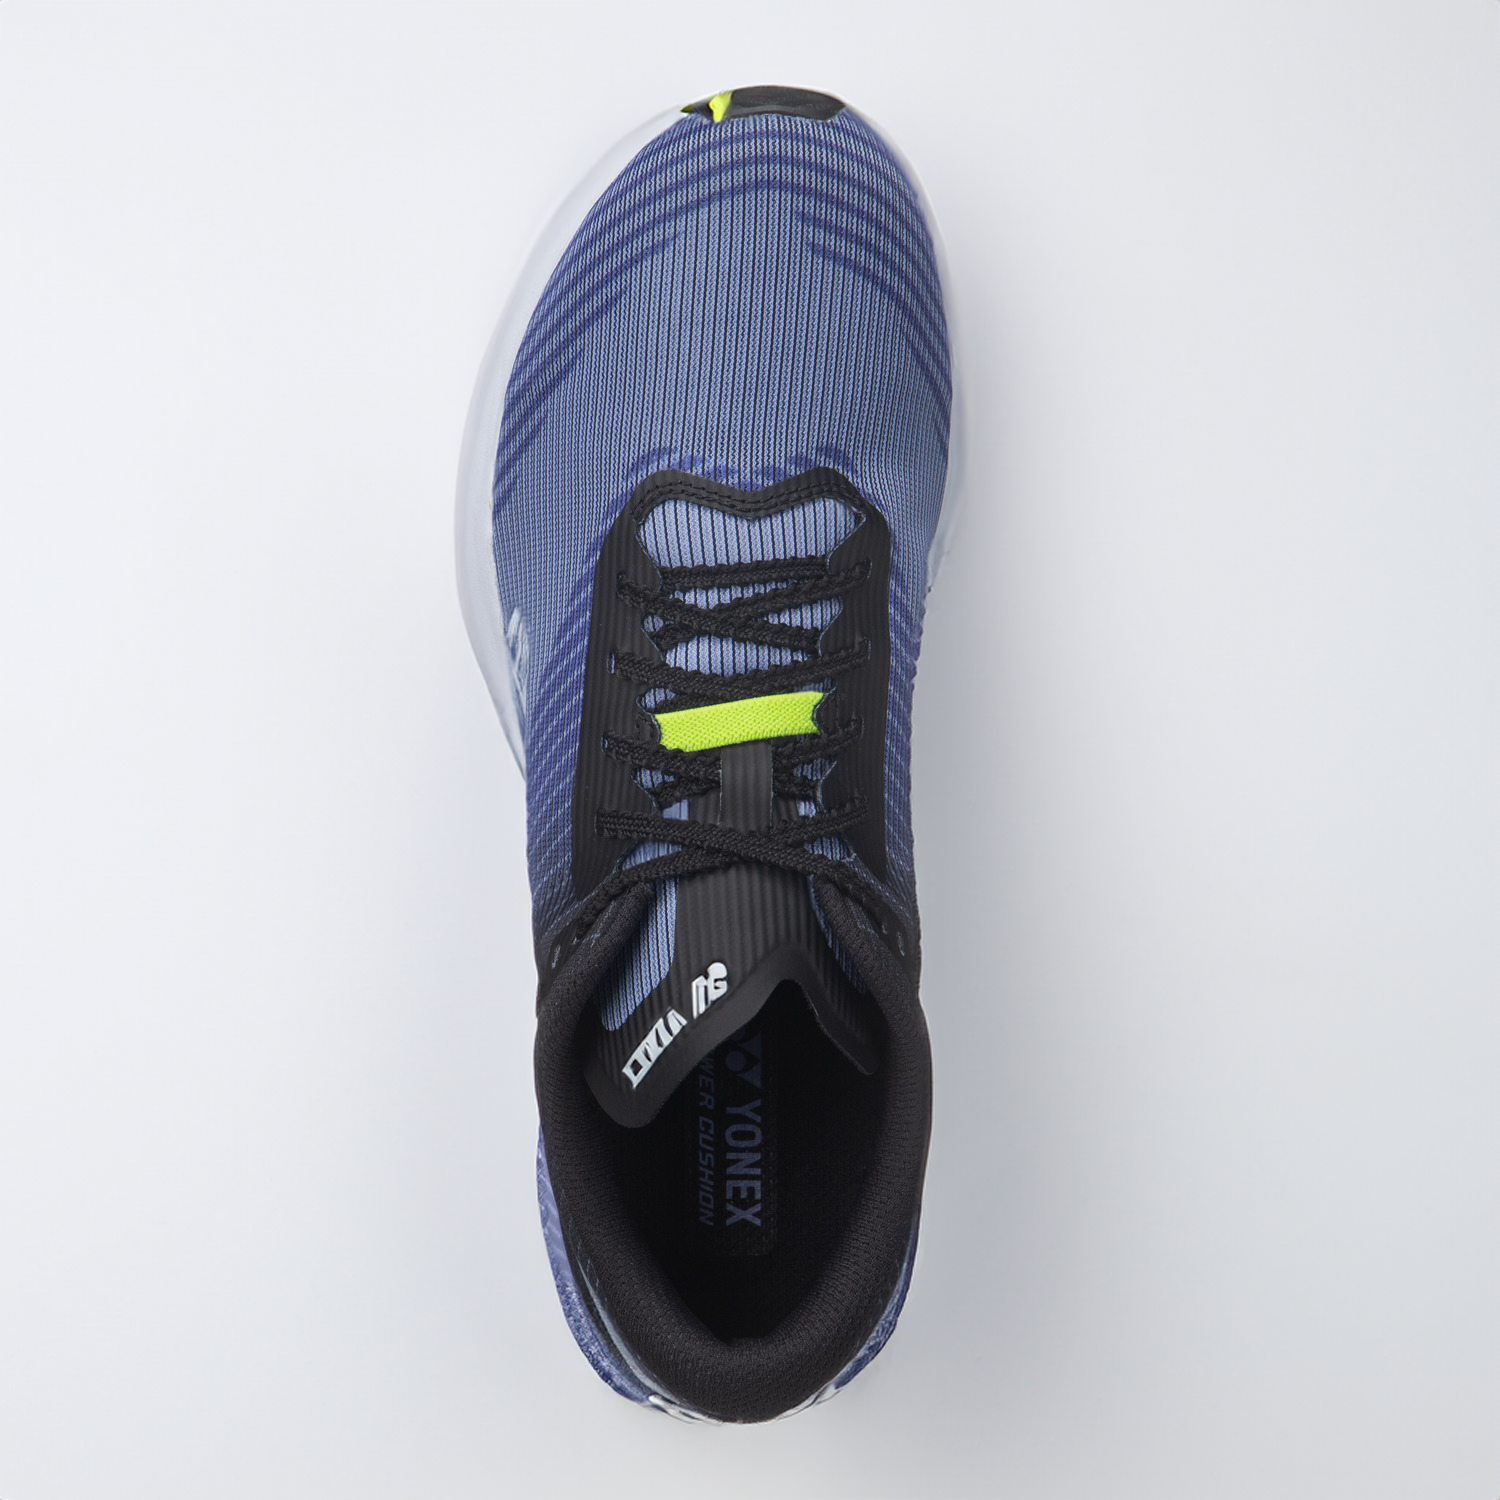 Yonex Carbon Cruise Aerus (Blueberry) Men's Running Training Shoe - PREORDER